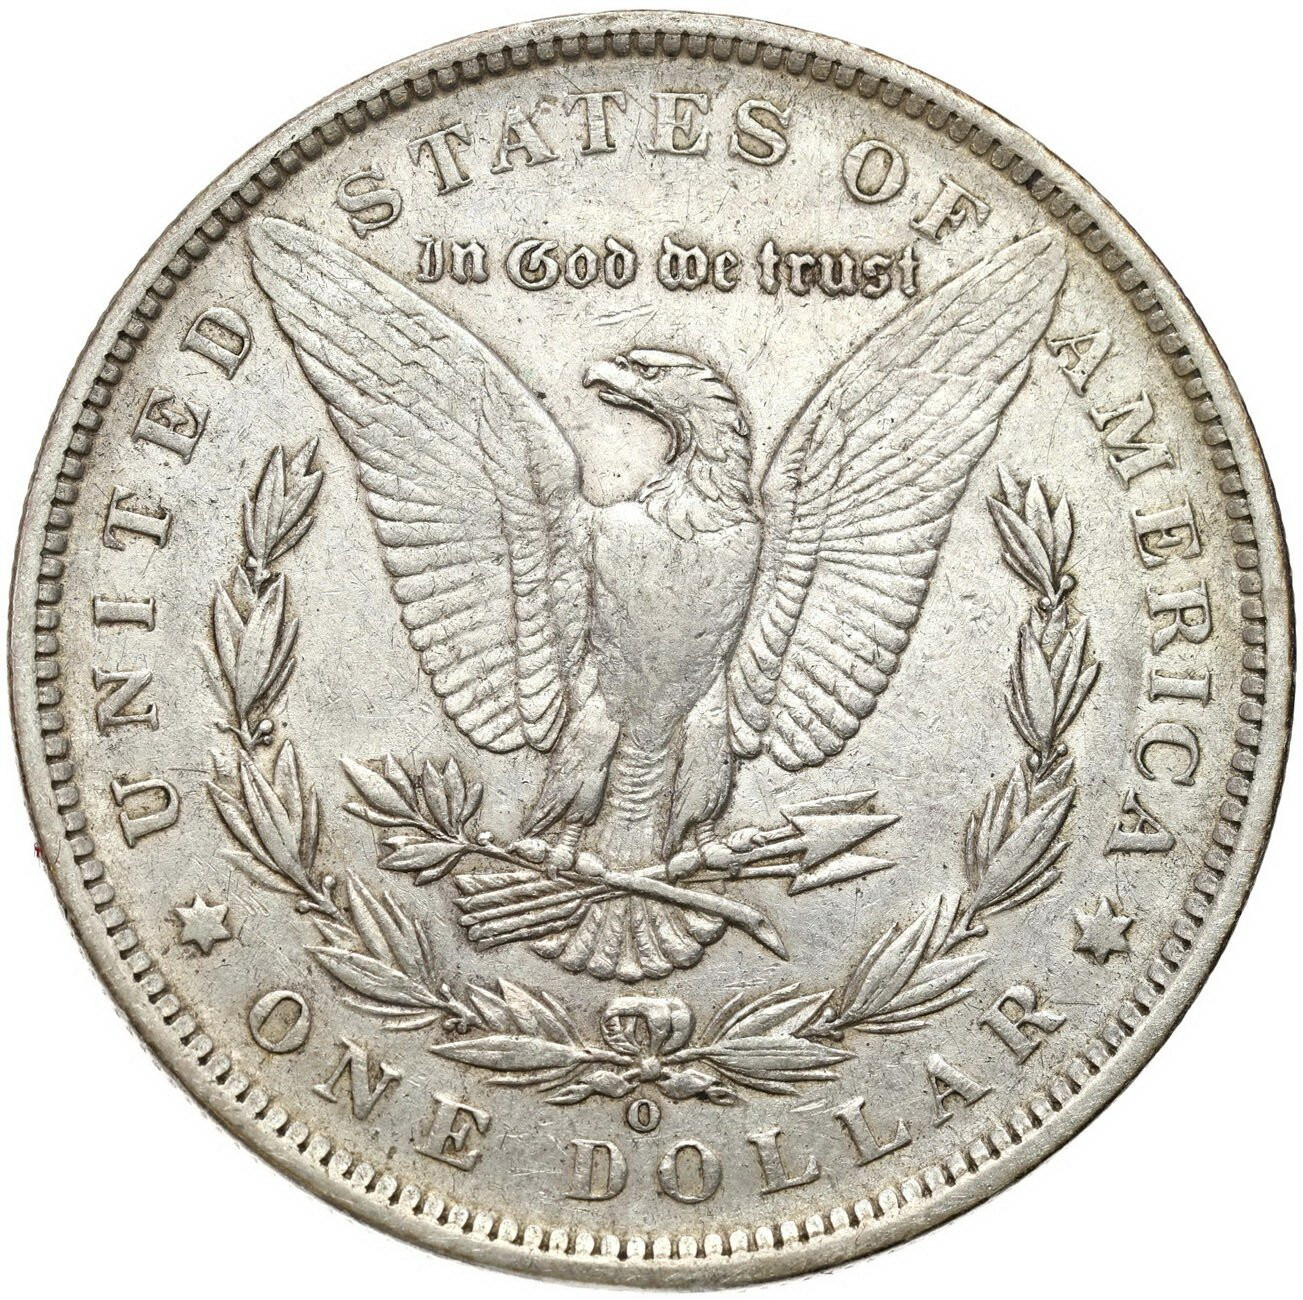 USA 1 dolar 1891 O, New Orleans 